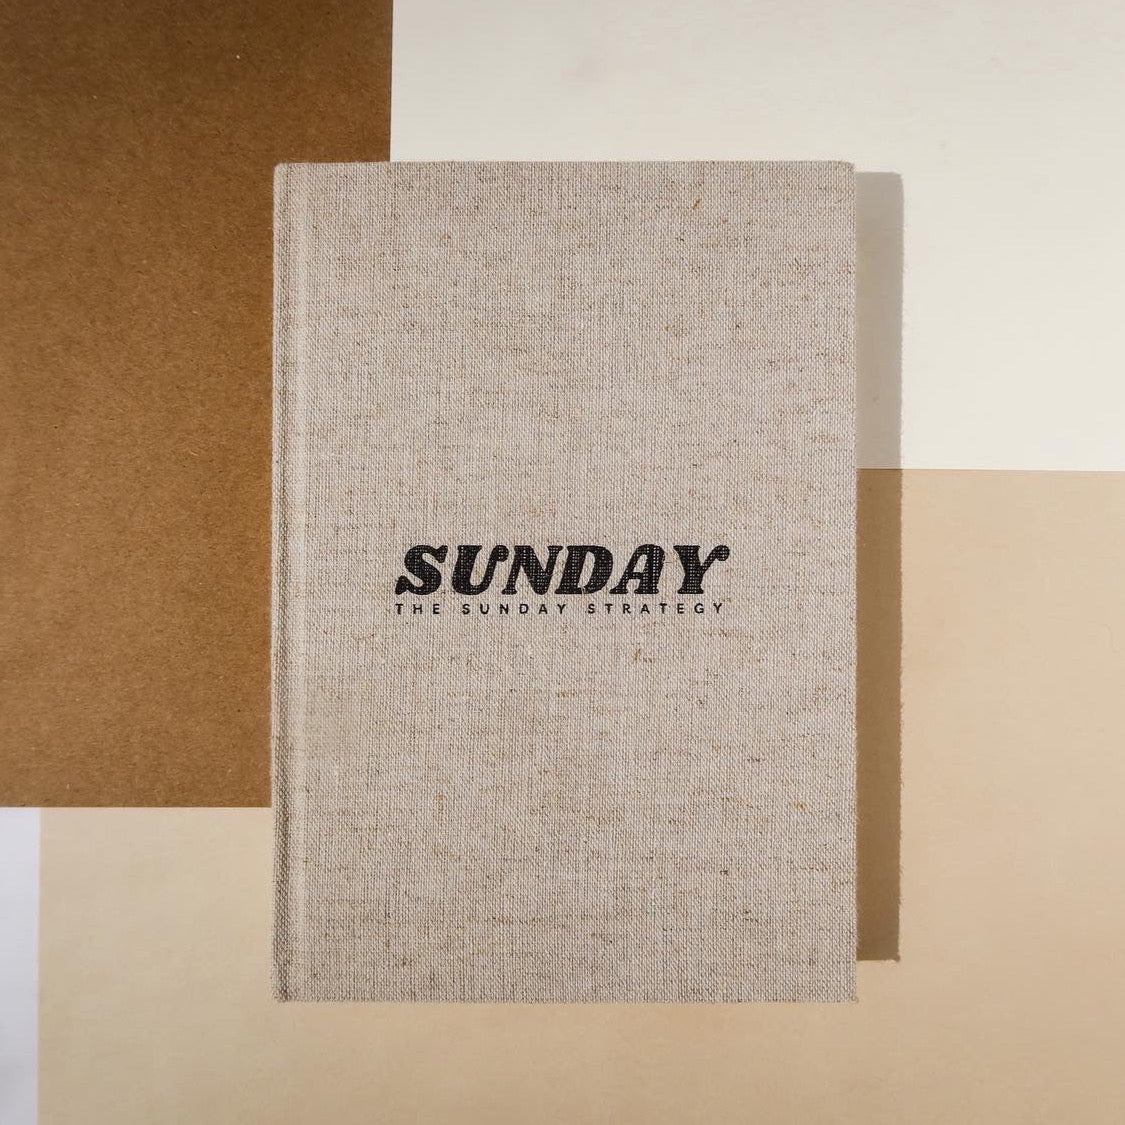 Undated Planner - Sunday Strategy